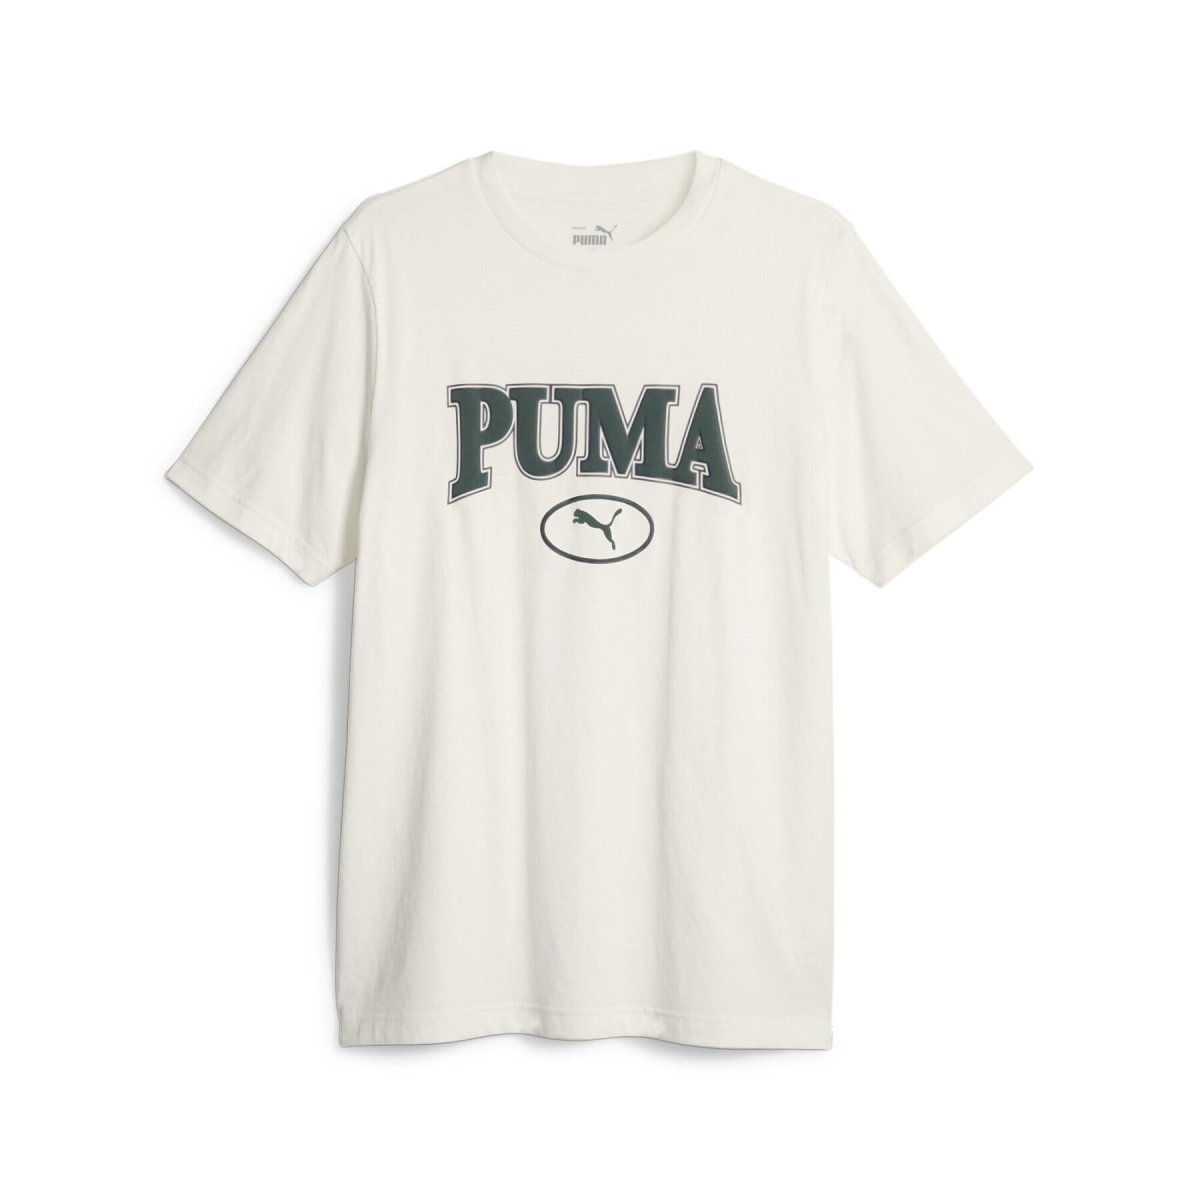 Puma PUMA MEN'S SQUAD WHITE TEE - INSPORT